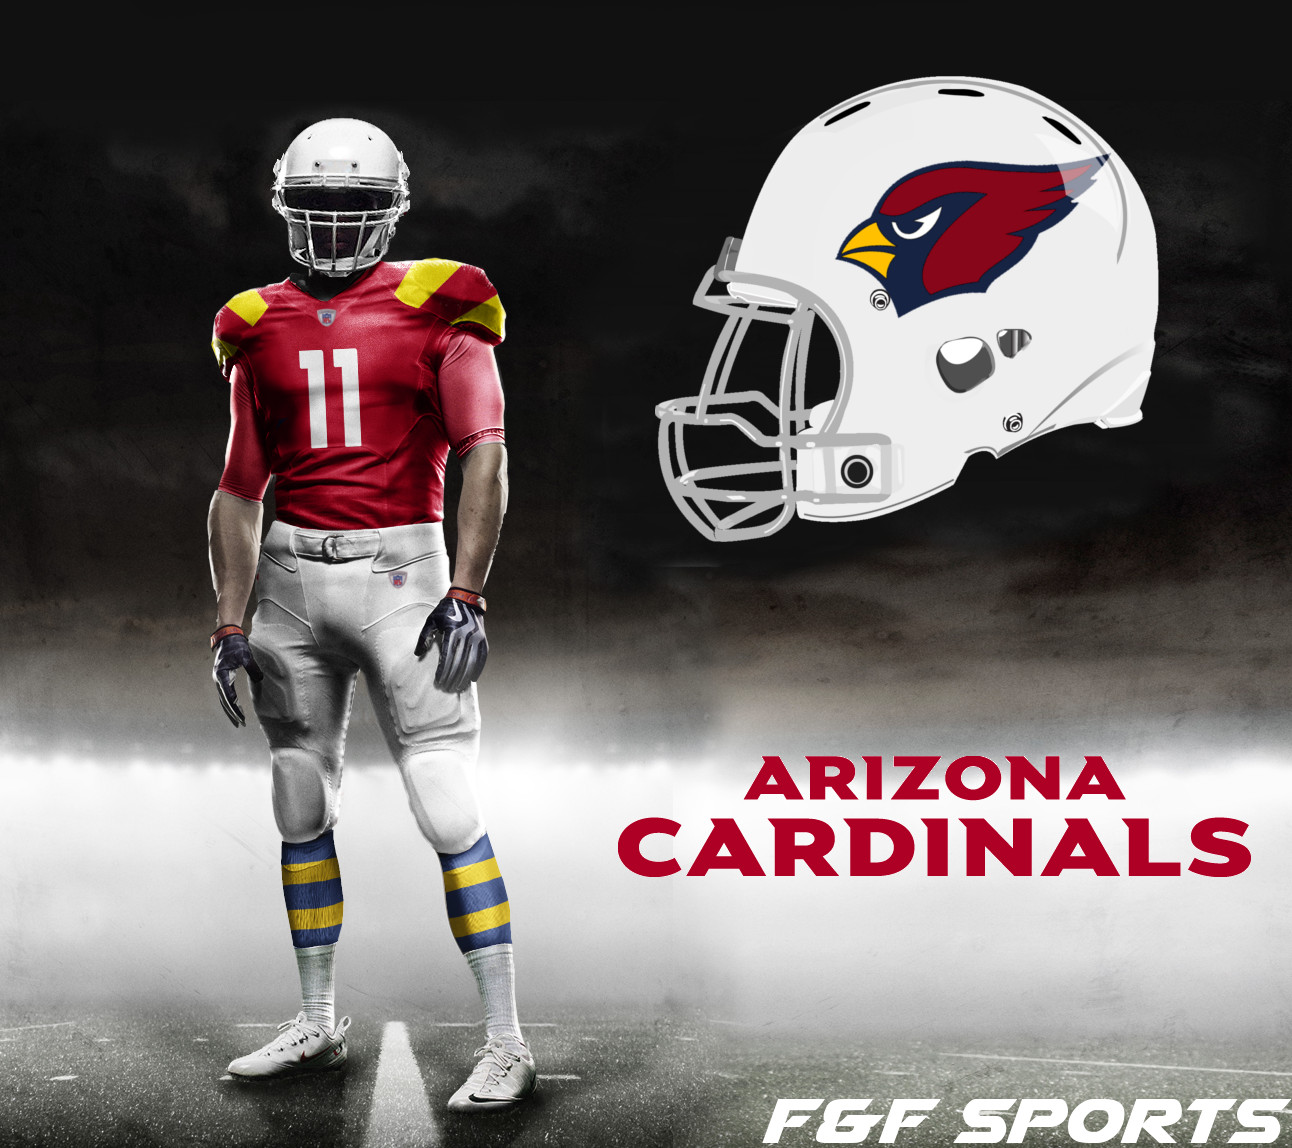 cardinals uniforms nfl